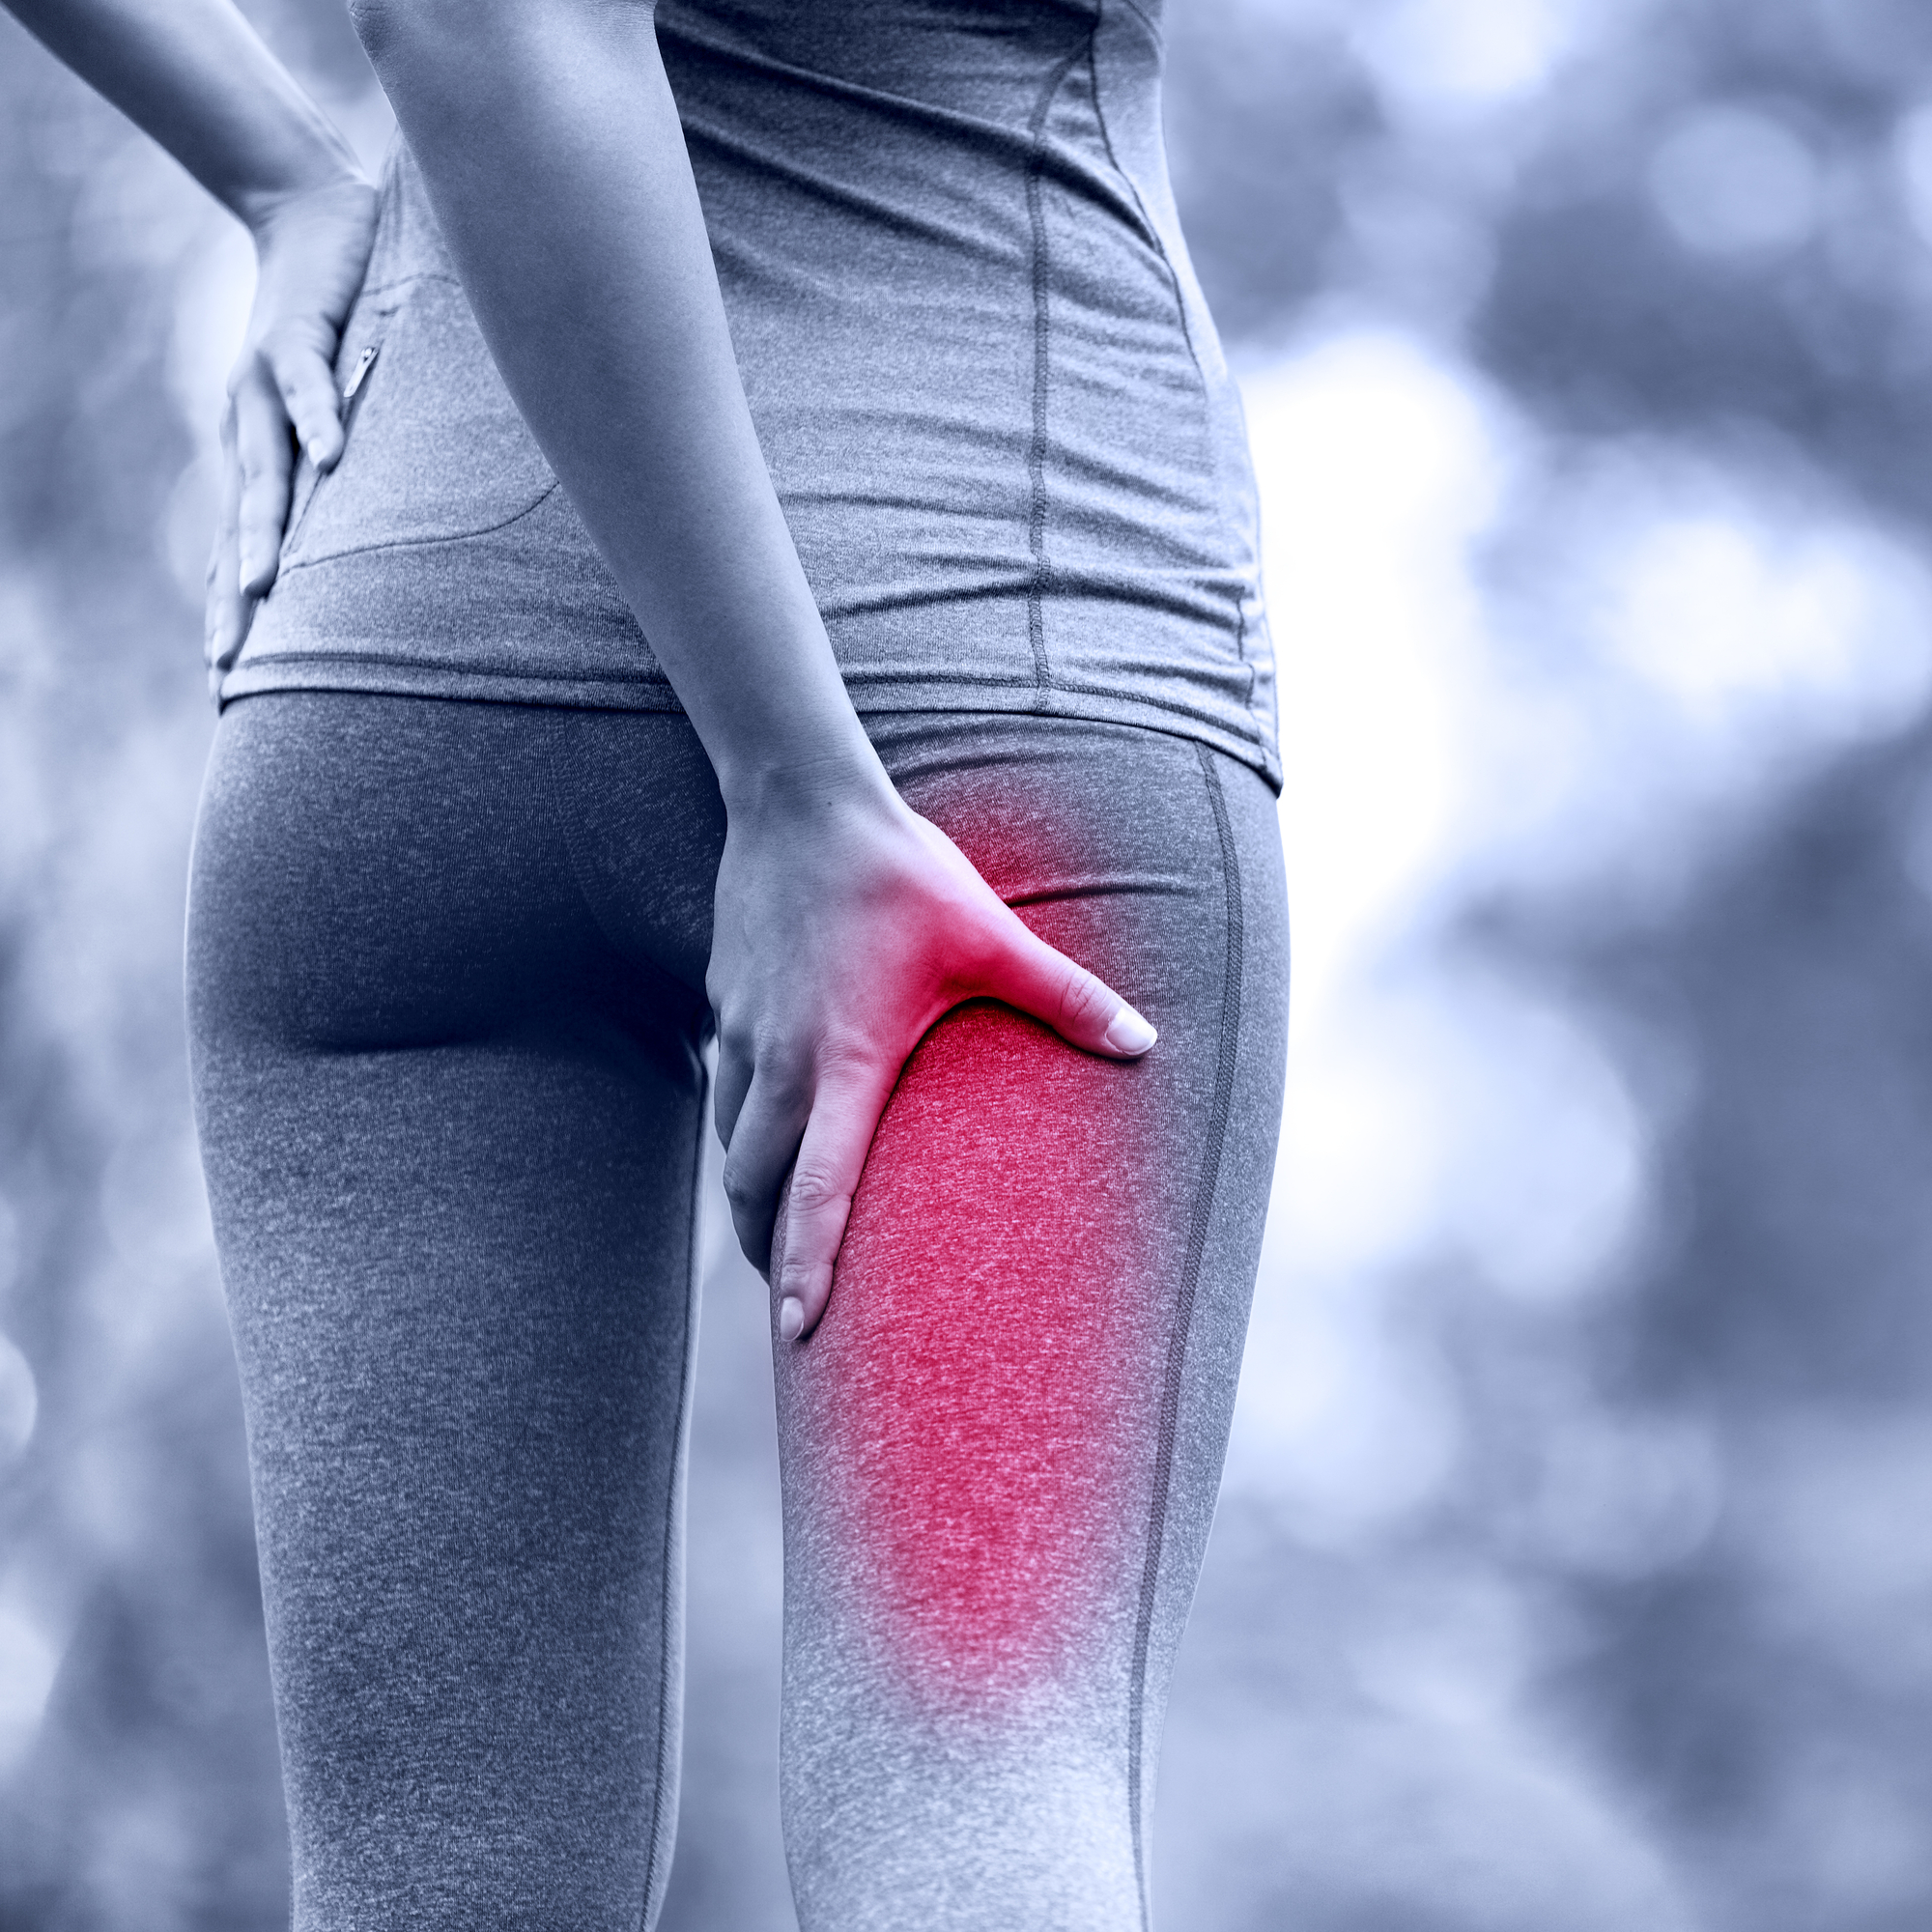 Hamstring sprain or cramps - Running sports injury